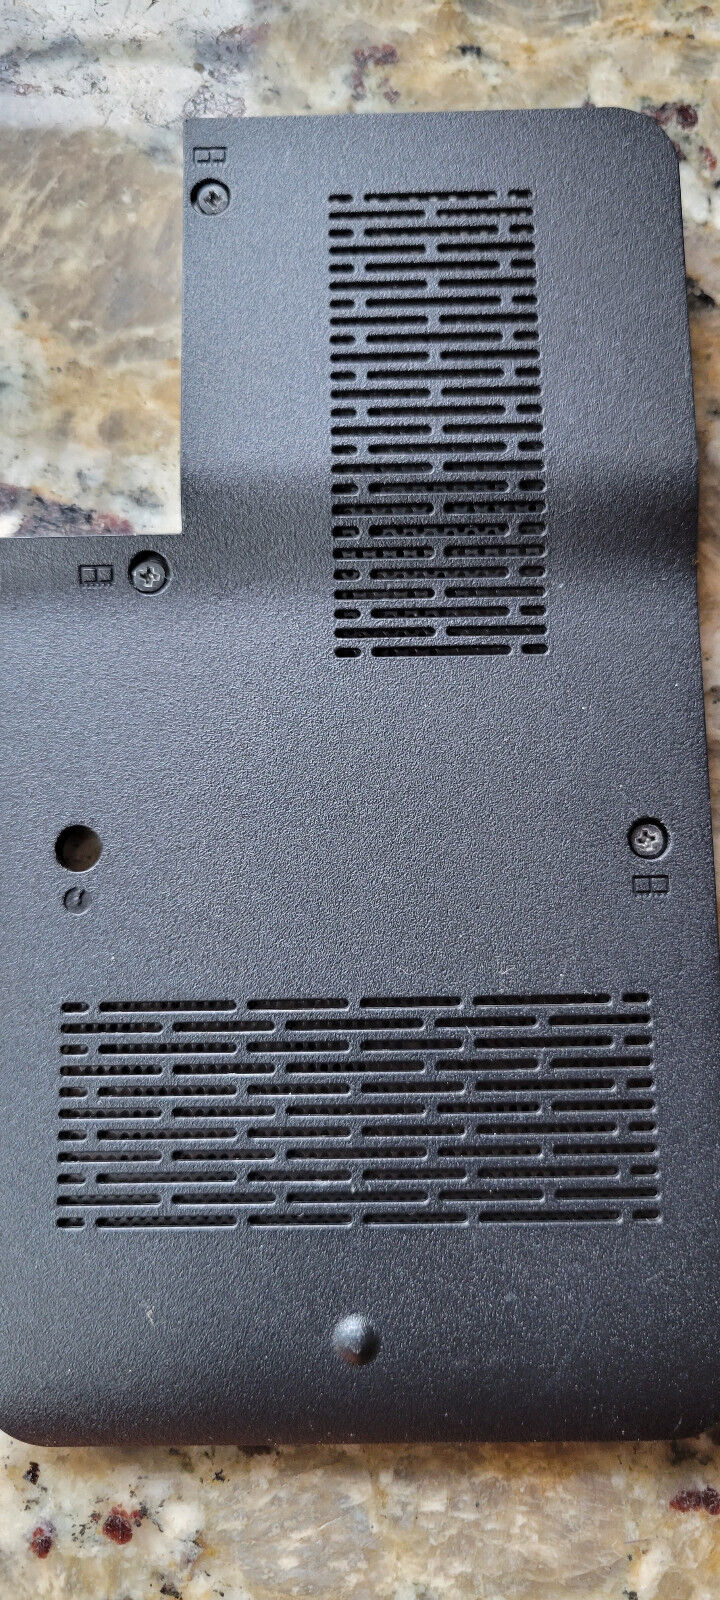 HP Pavilion DV6 dv6z-1100 Laptop HDD Hard Drive Access Cover Door - 3T00 - 171